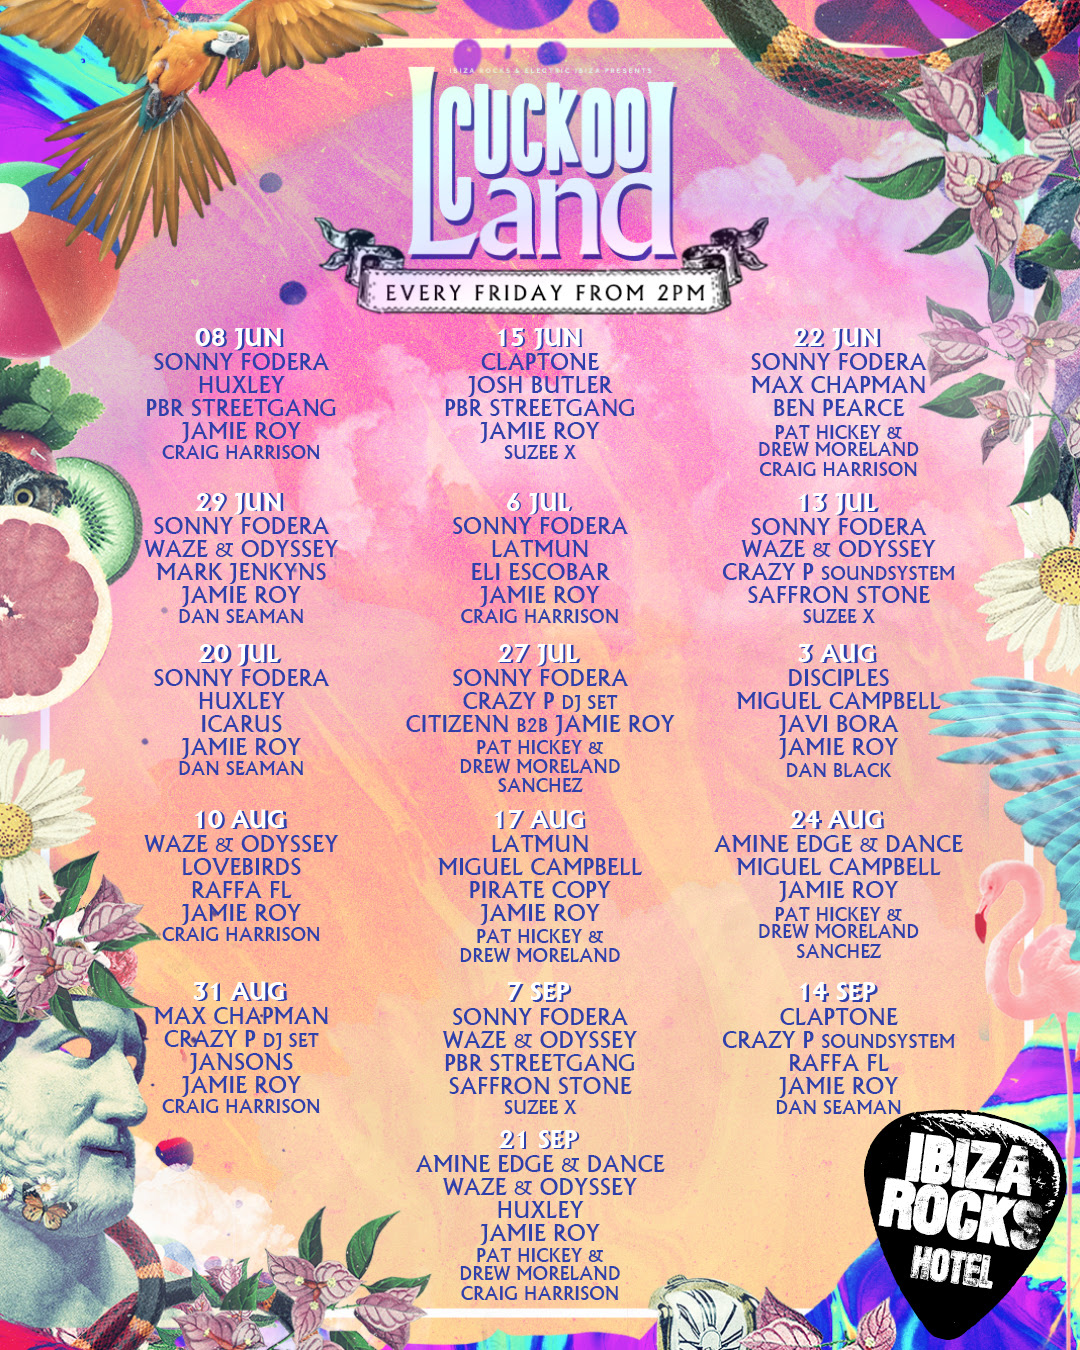 Cuckoo Land Ibiza 2018 - Full Line Up Has Landed